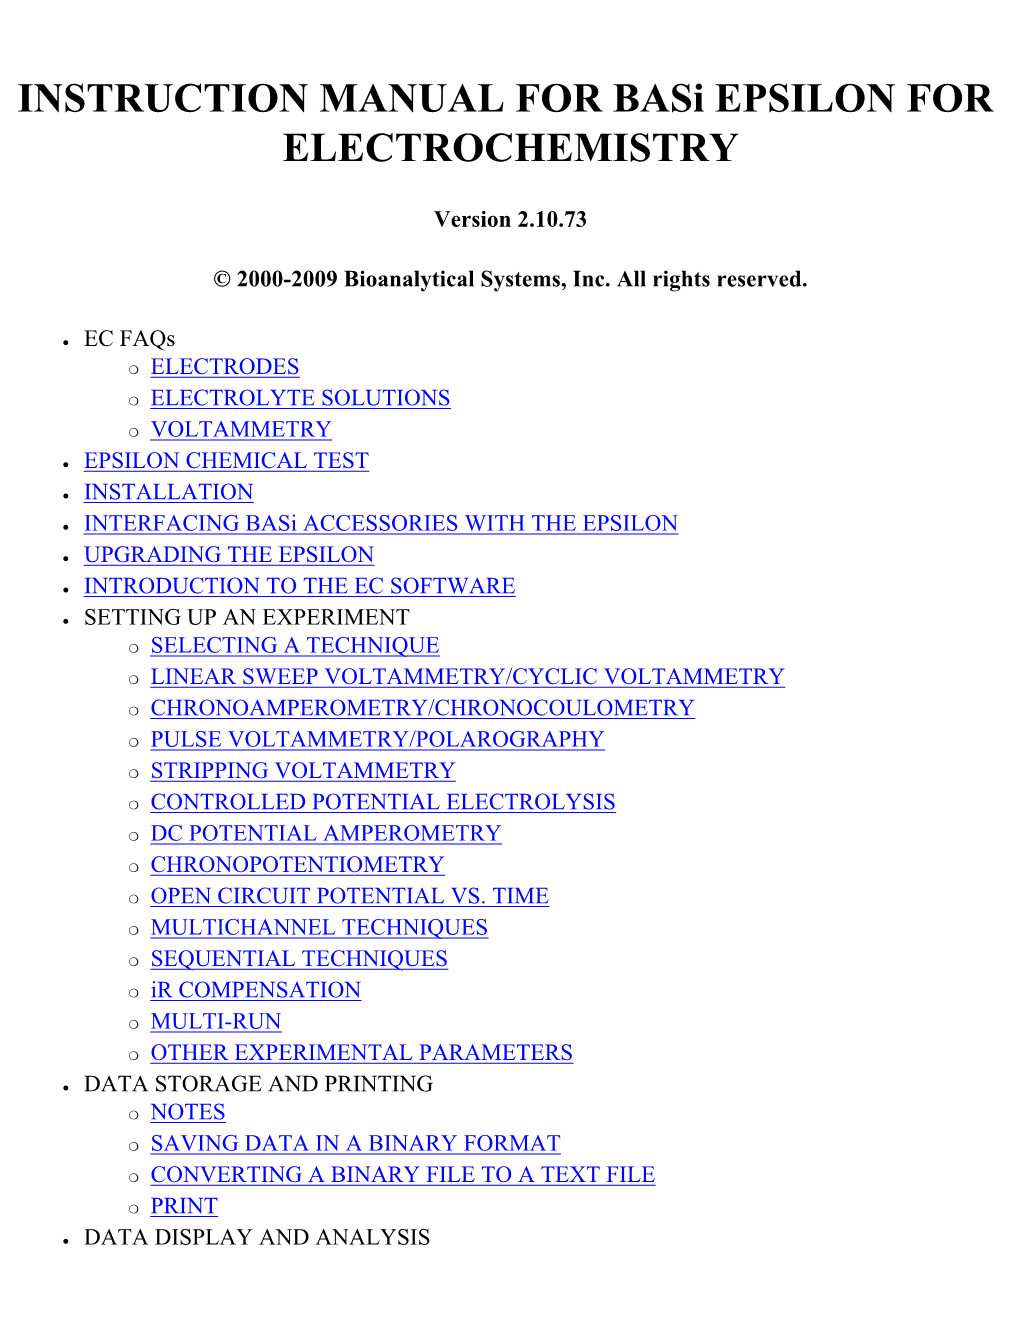 INSTRUCTION MANUAL for Basi EPSILON for ELECTROCHEMISTRY